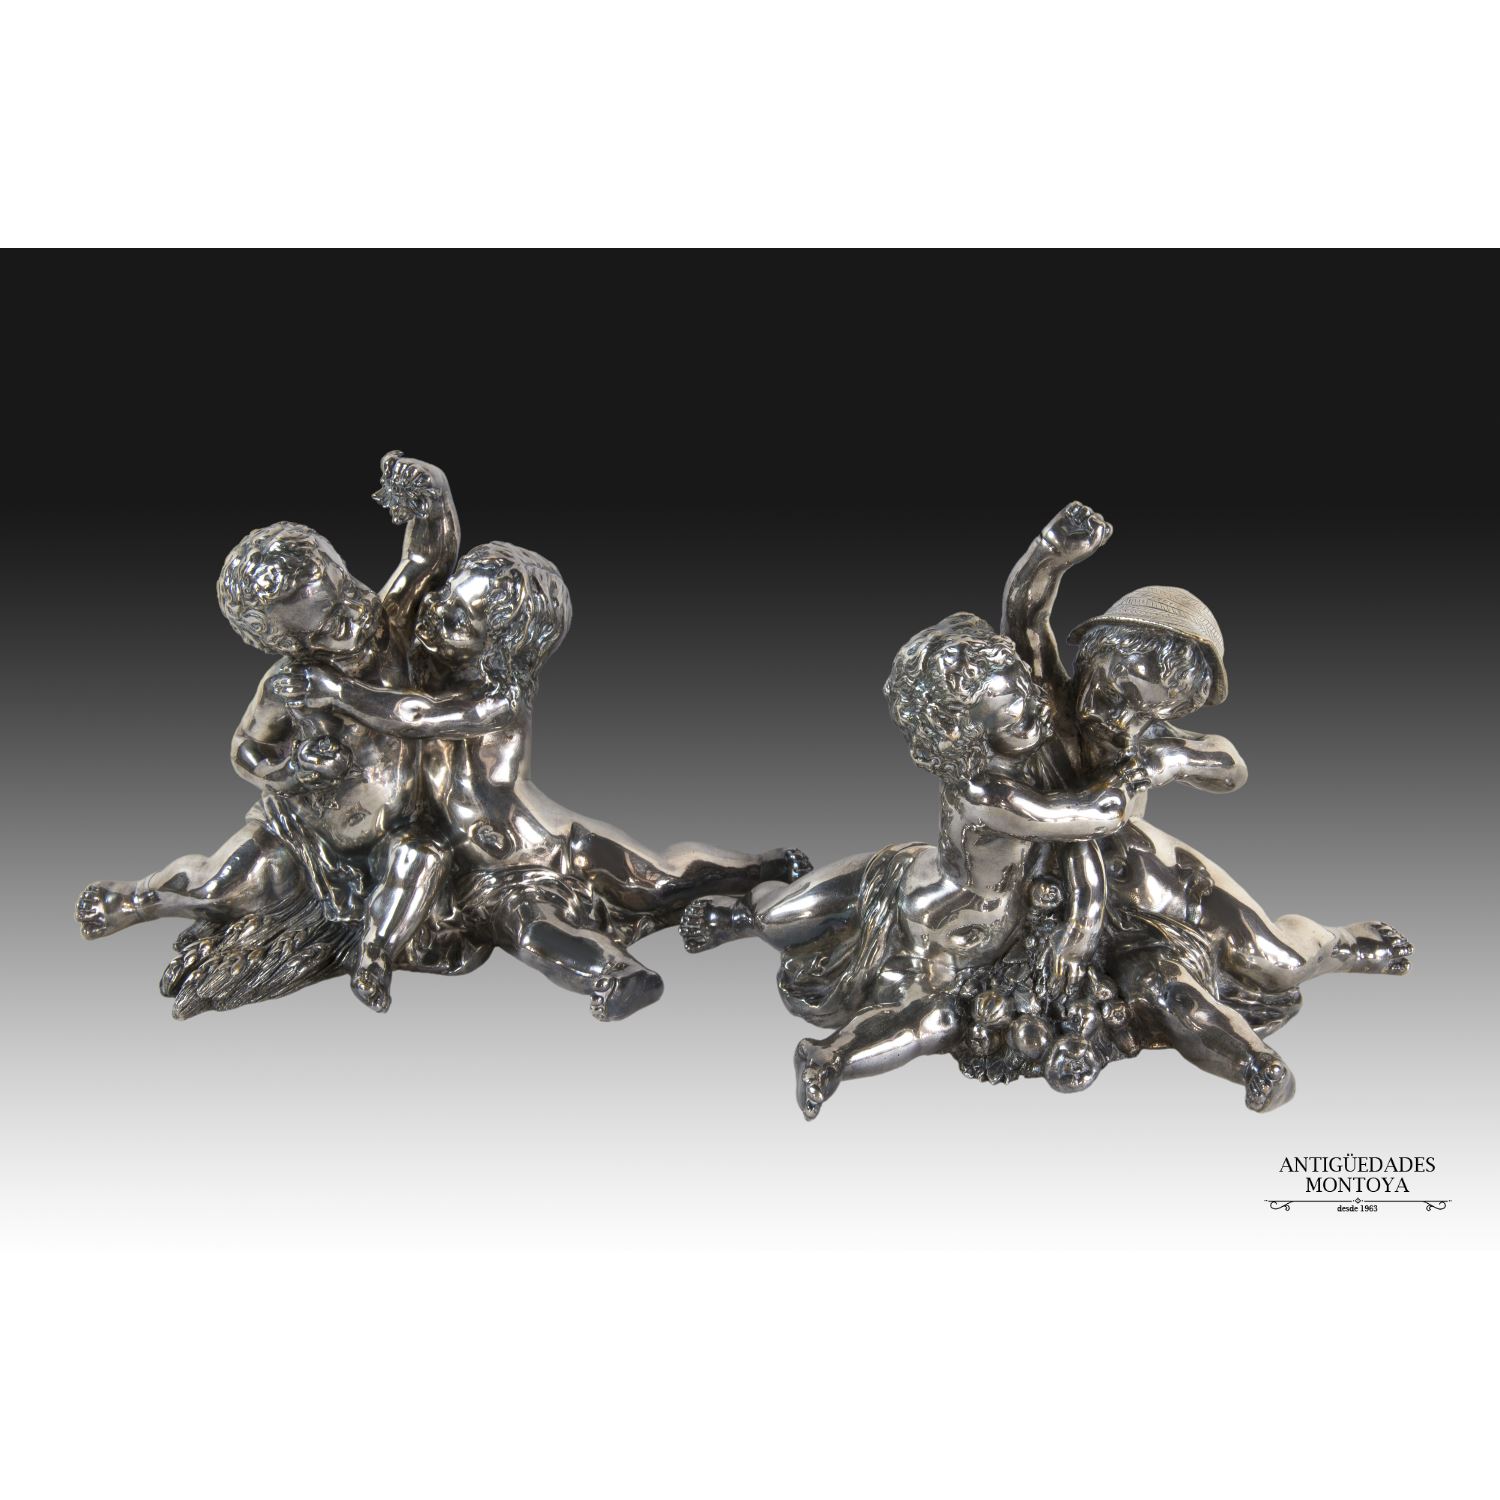 Sxix silver bronze figures